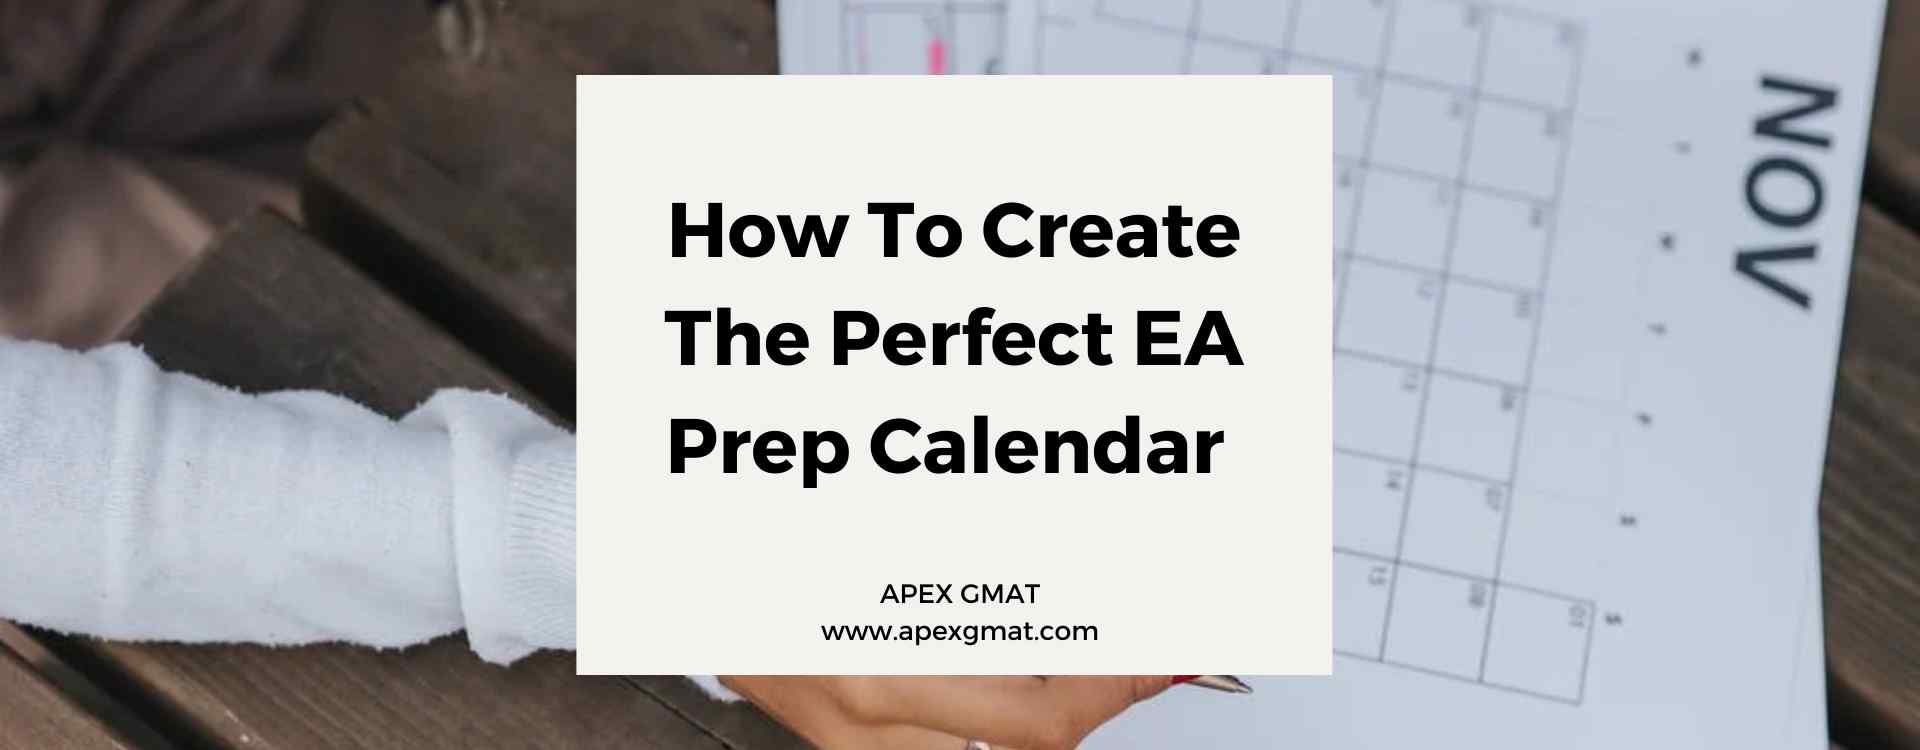 How To Create The Perfect EA Prep Calendar? Apex GMAT